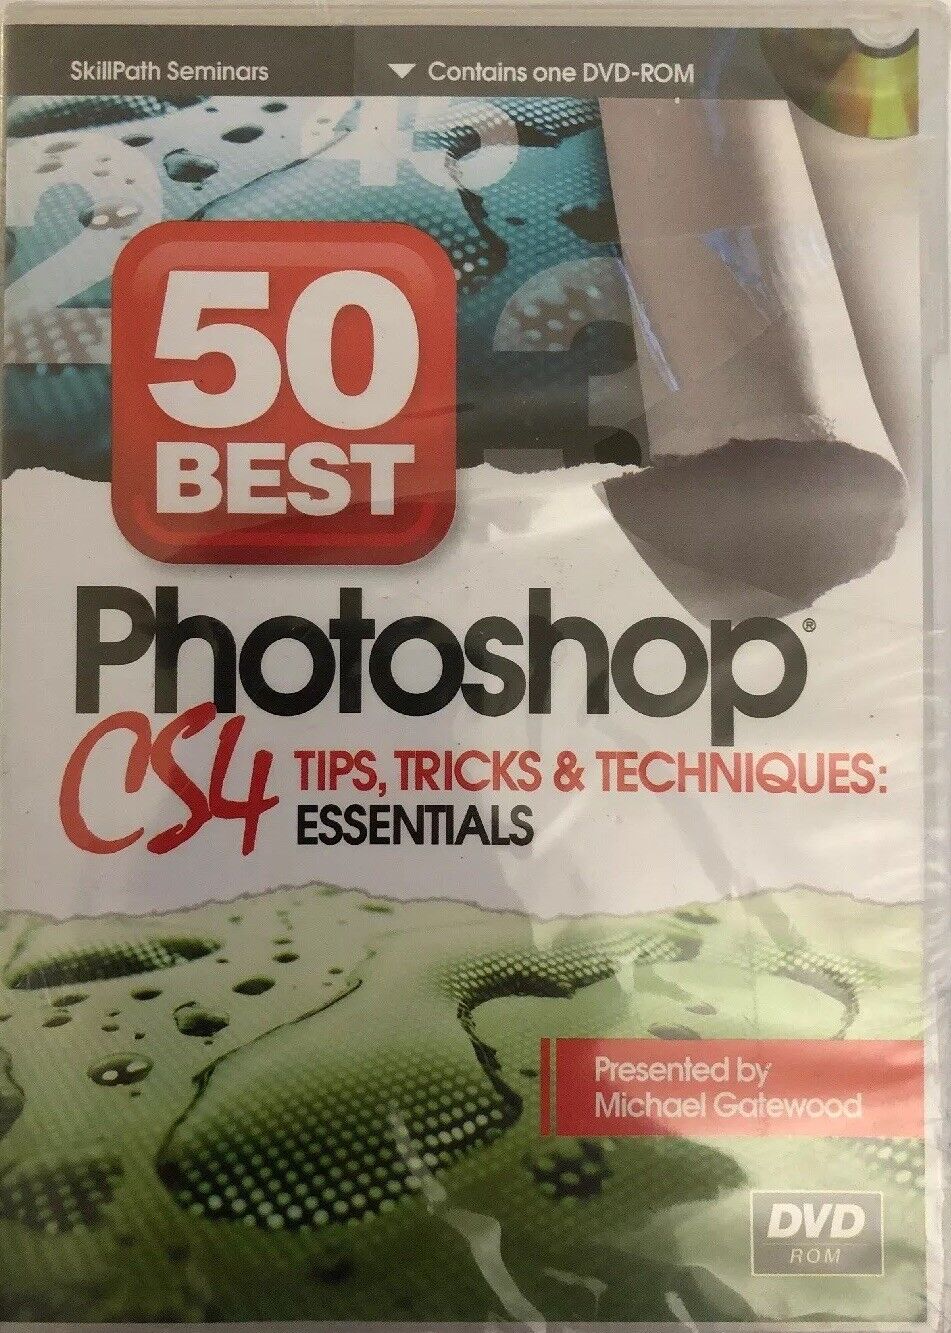 50 Best Photoshop CS4 Tips Tricks Michael Gatewood DVD-RARE VINTAGE-SHIP N 24HRS